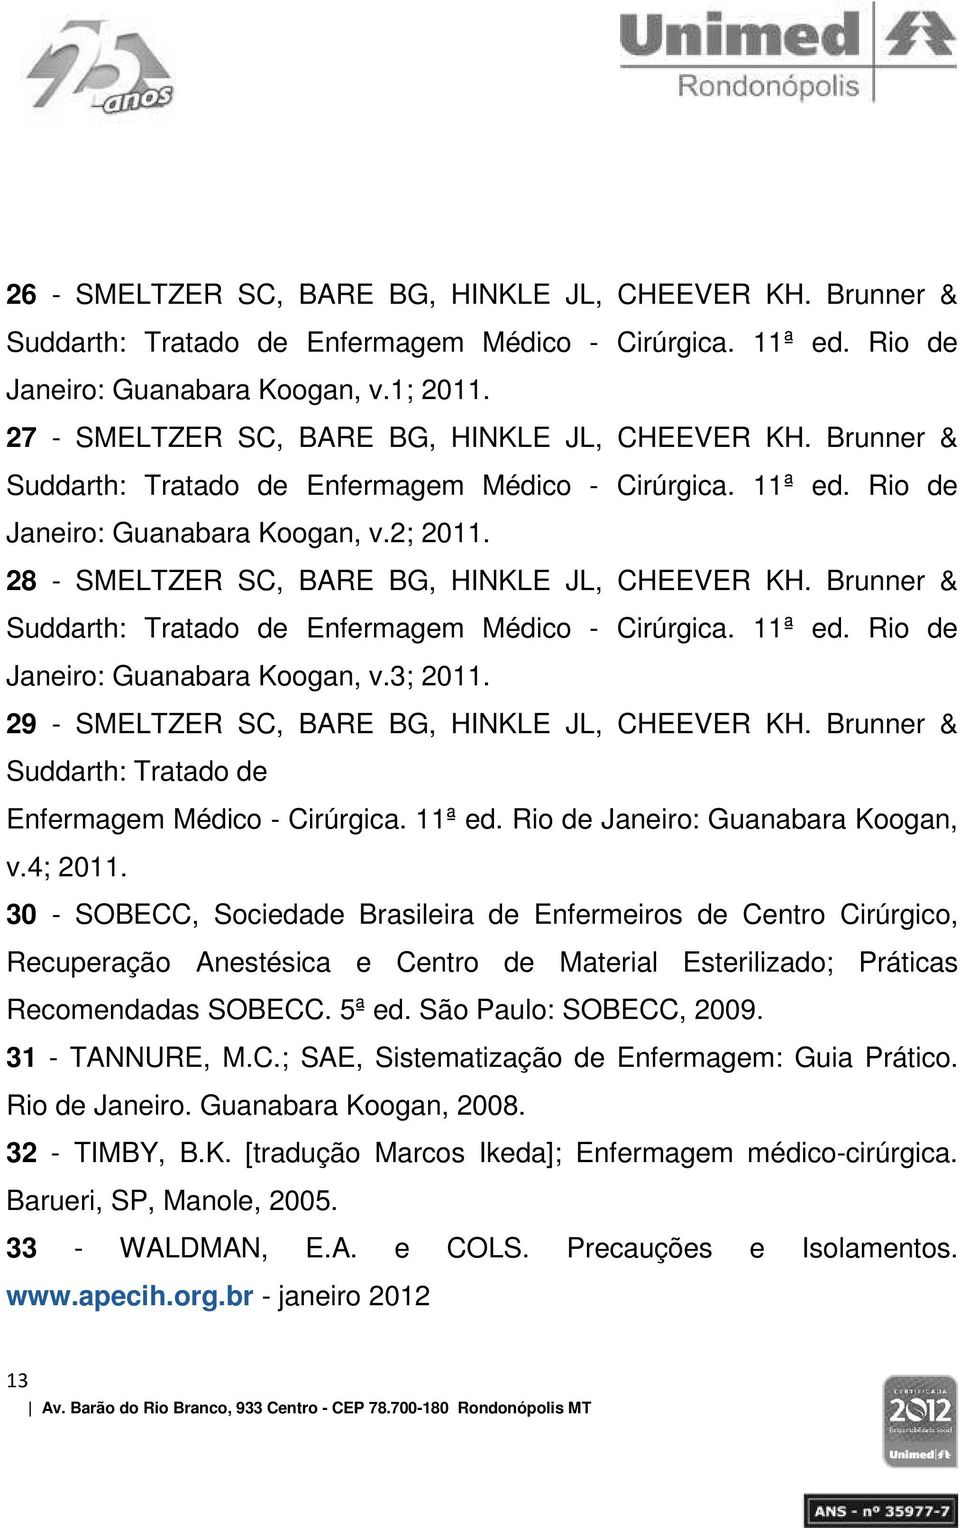 28 - SMELTZER SC, BARE BG, HINKLE JL, CHEEVER KH. Brunner & Suddarth: Tratado de Enfermagem Médico - Cirúrgica. 11ª ed. Rio de Janeiro: Guanabara Koogan, v.3; 2011.